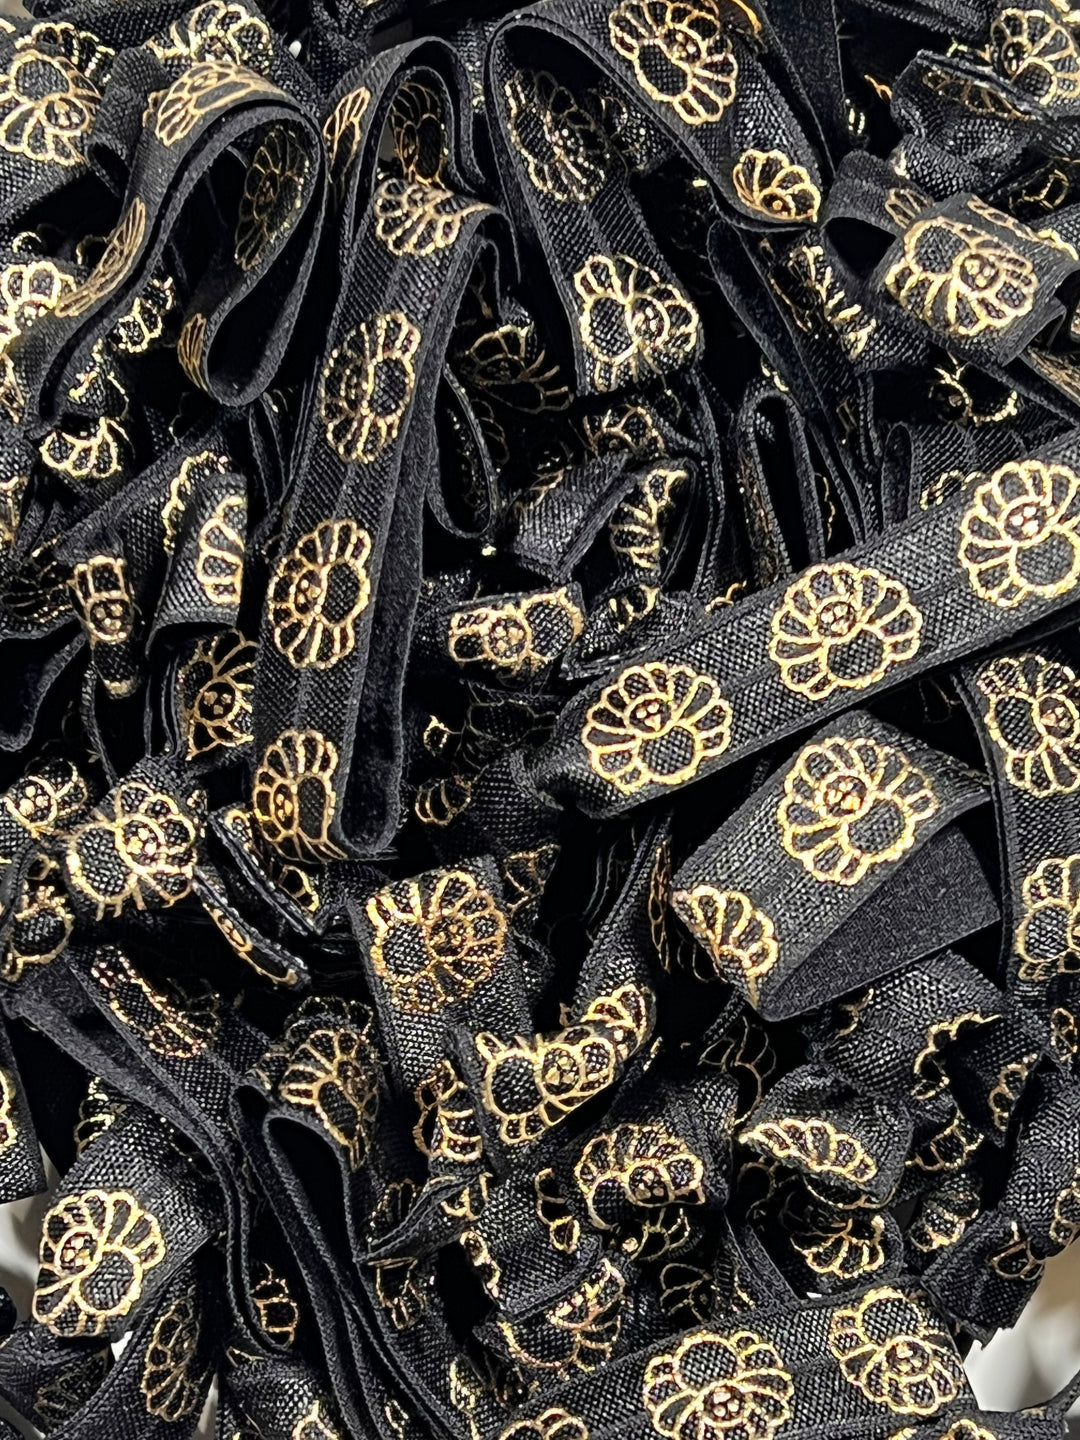 Gold Turkey foil on Black Design Hair Ties